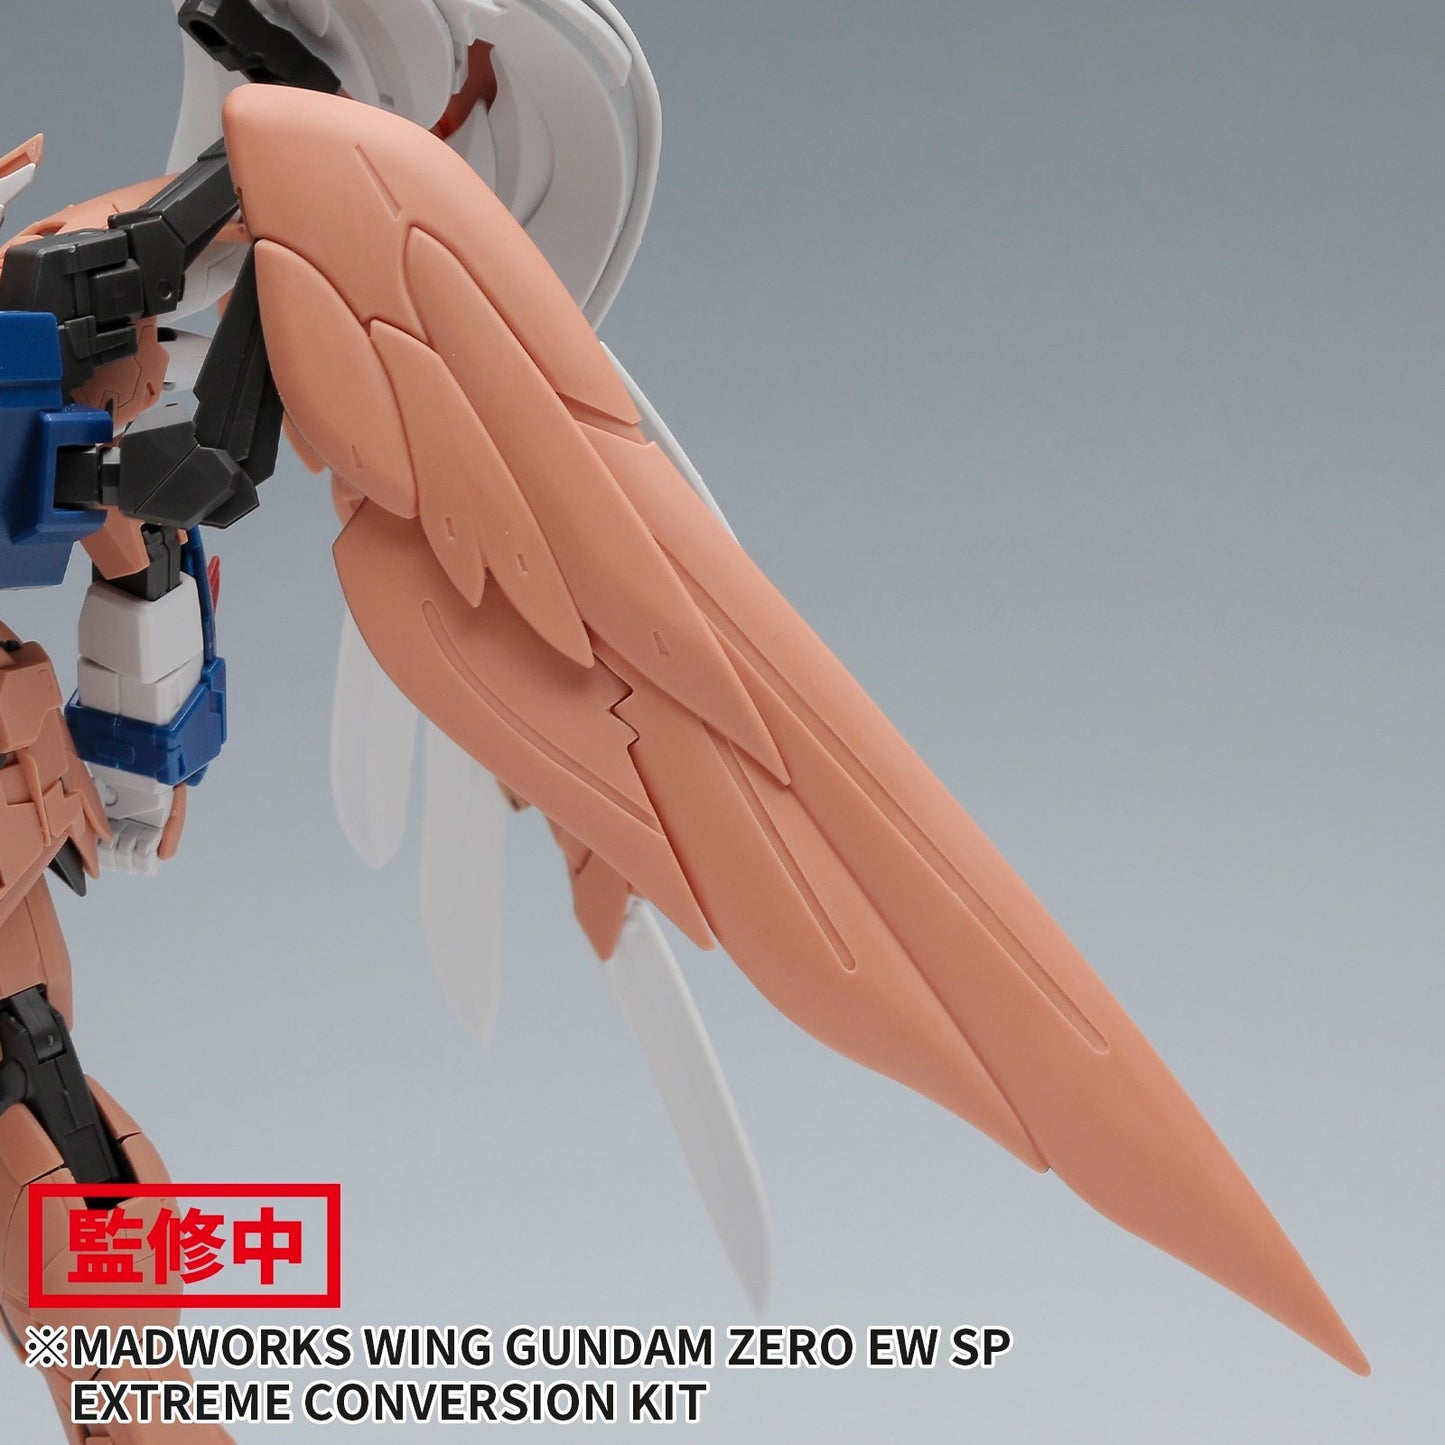 Madworks MG Wing Gundam EW GK Conversion Kit